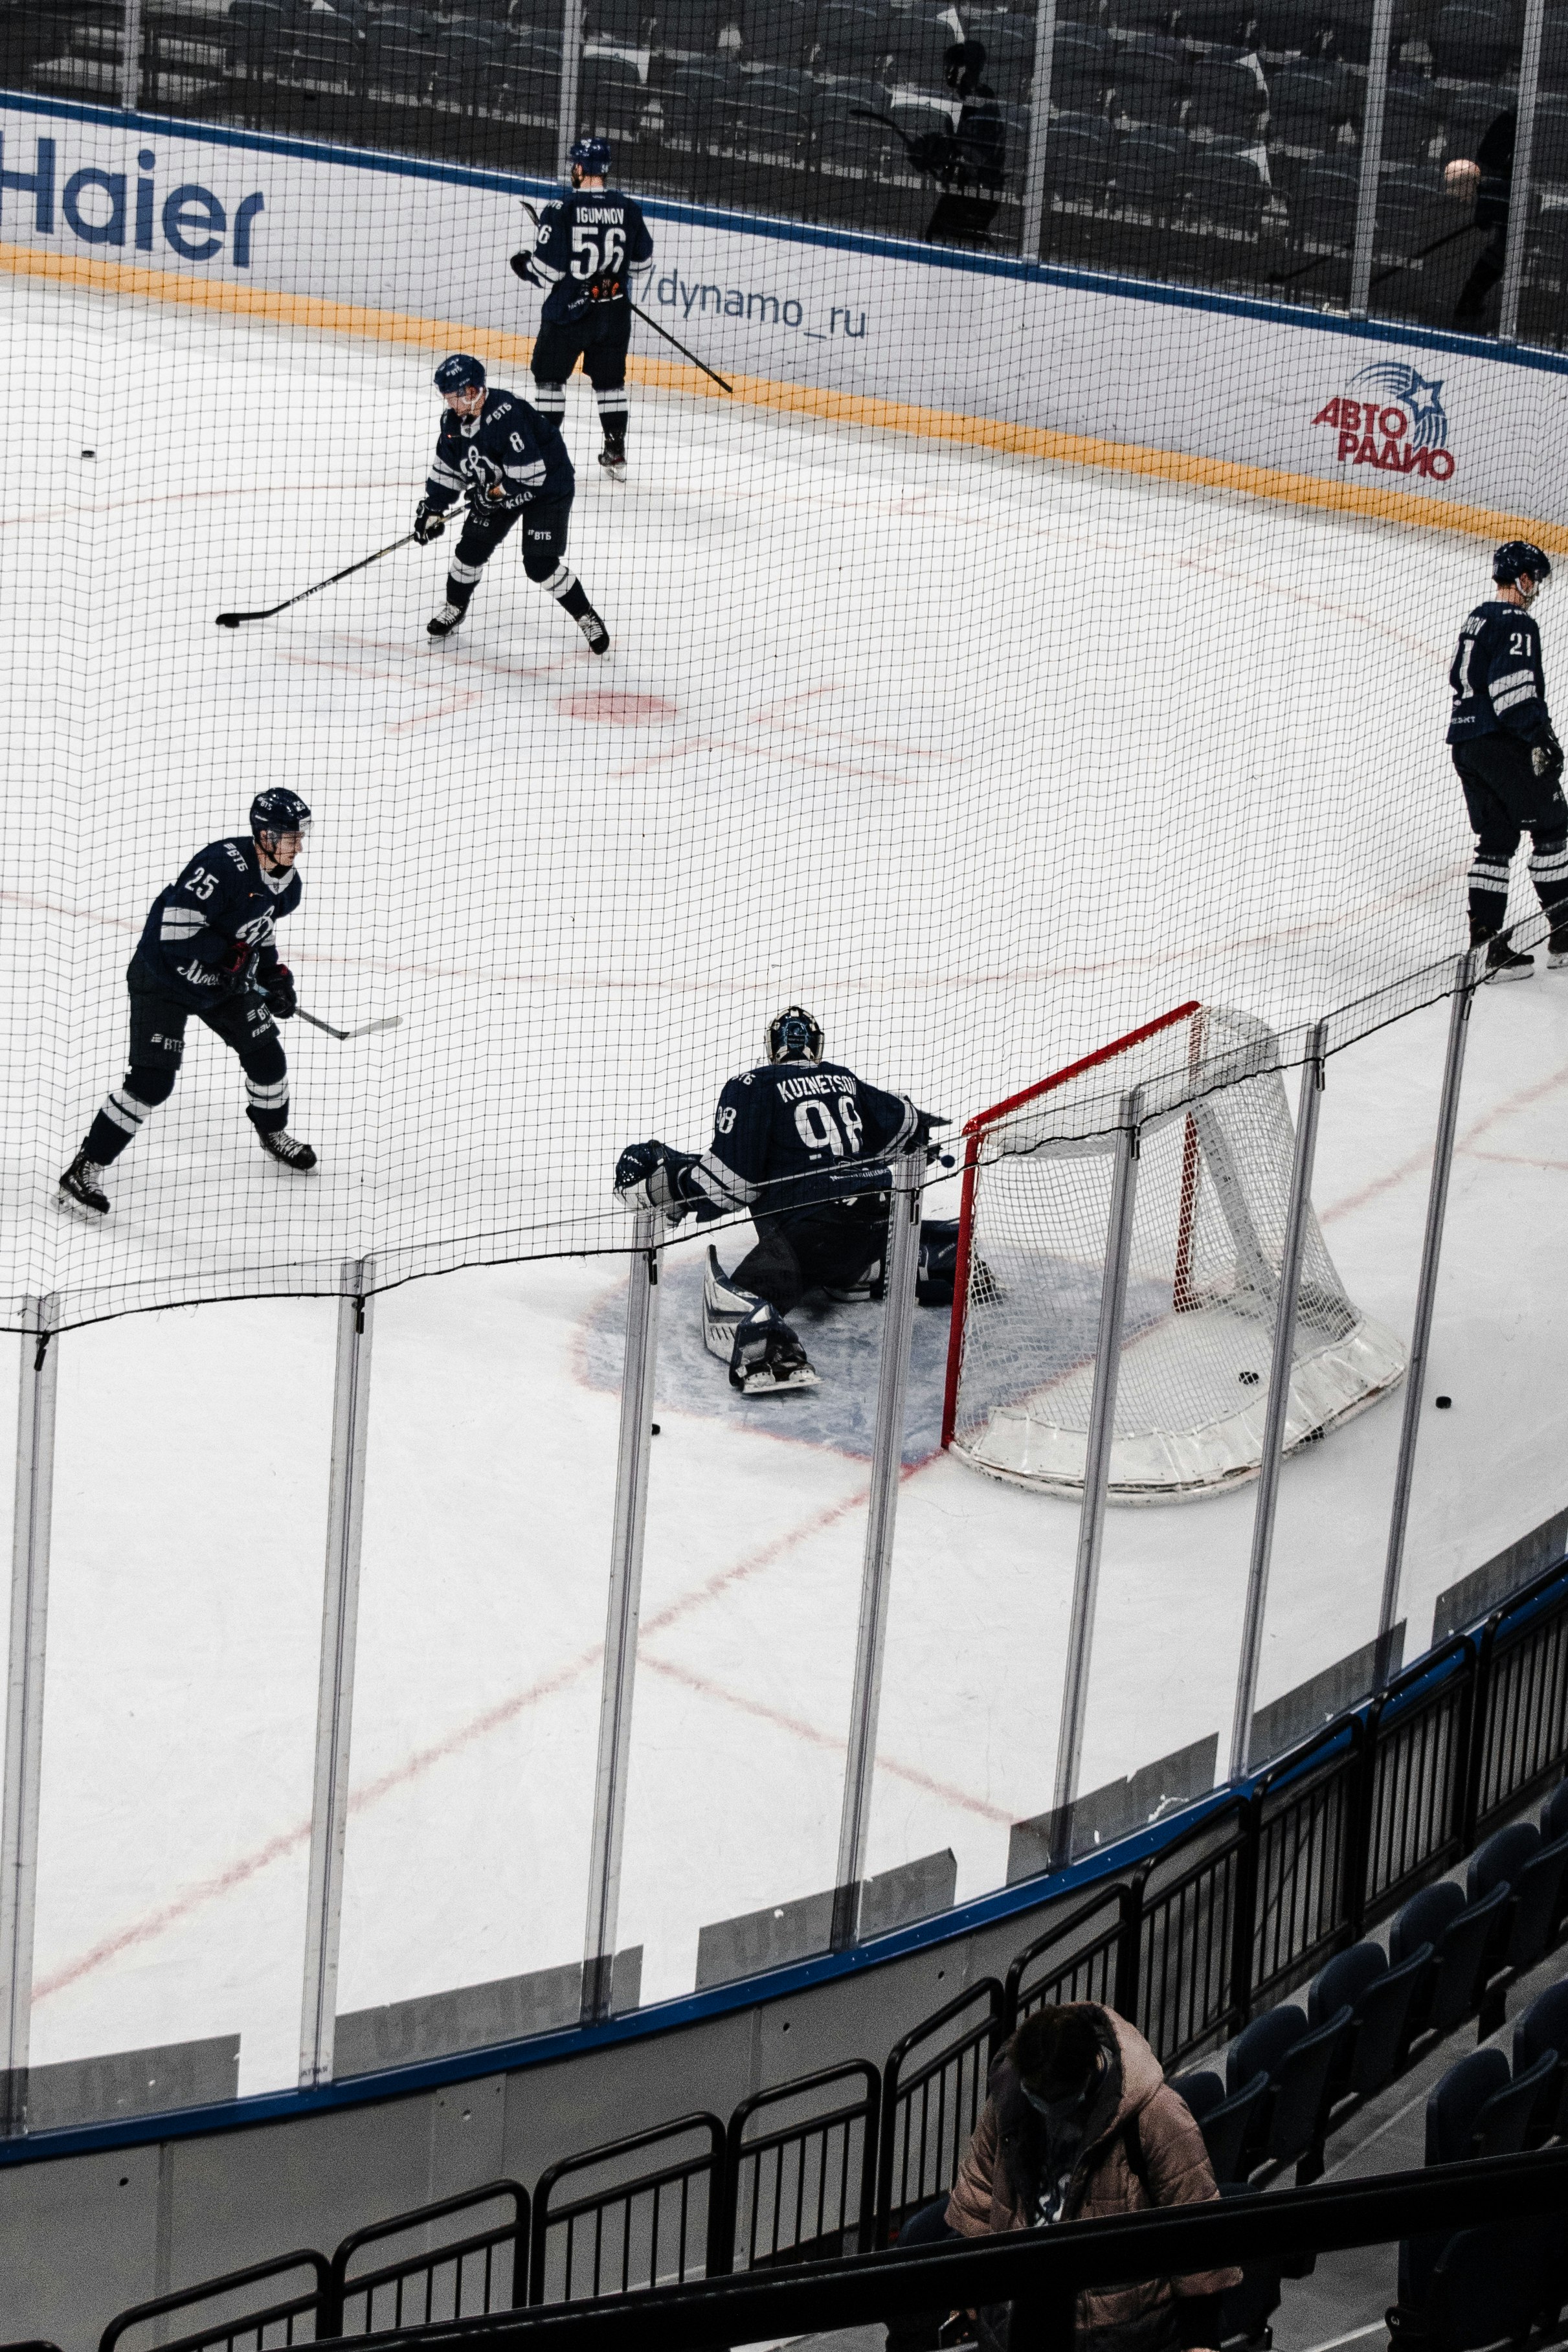 man in black ice hockey jersey riding on ice hockey stick